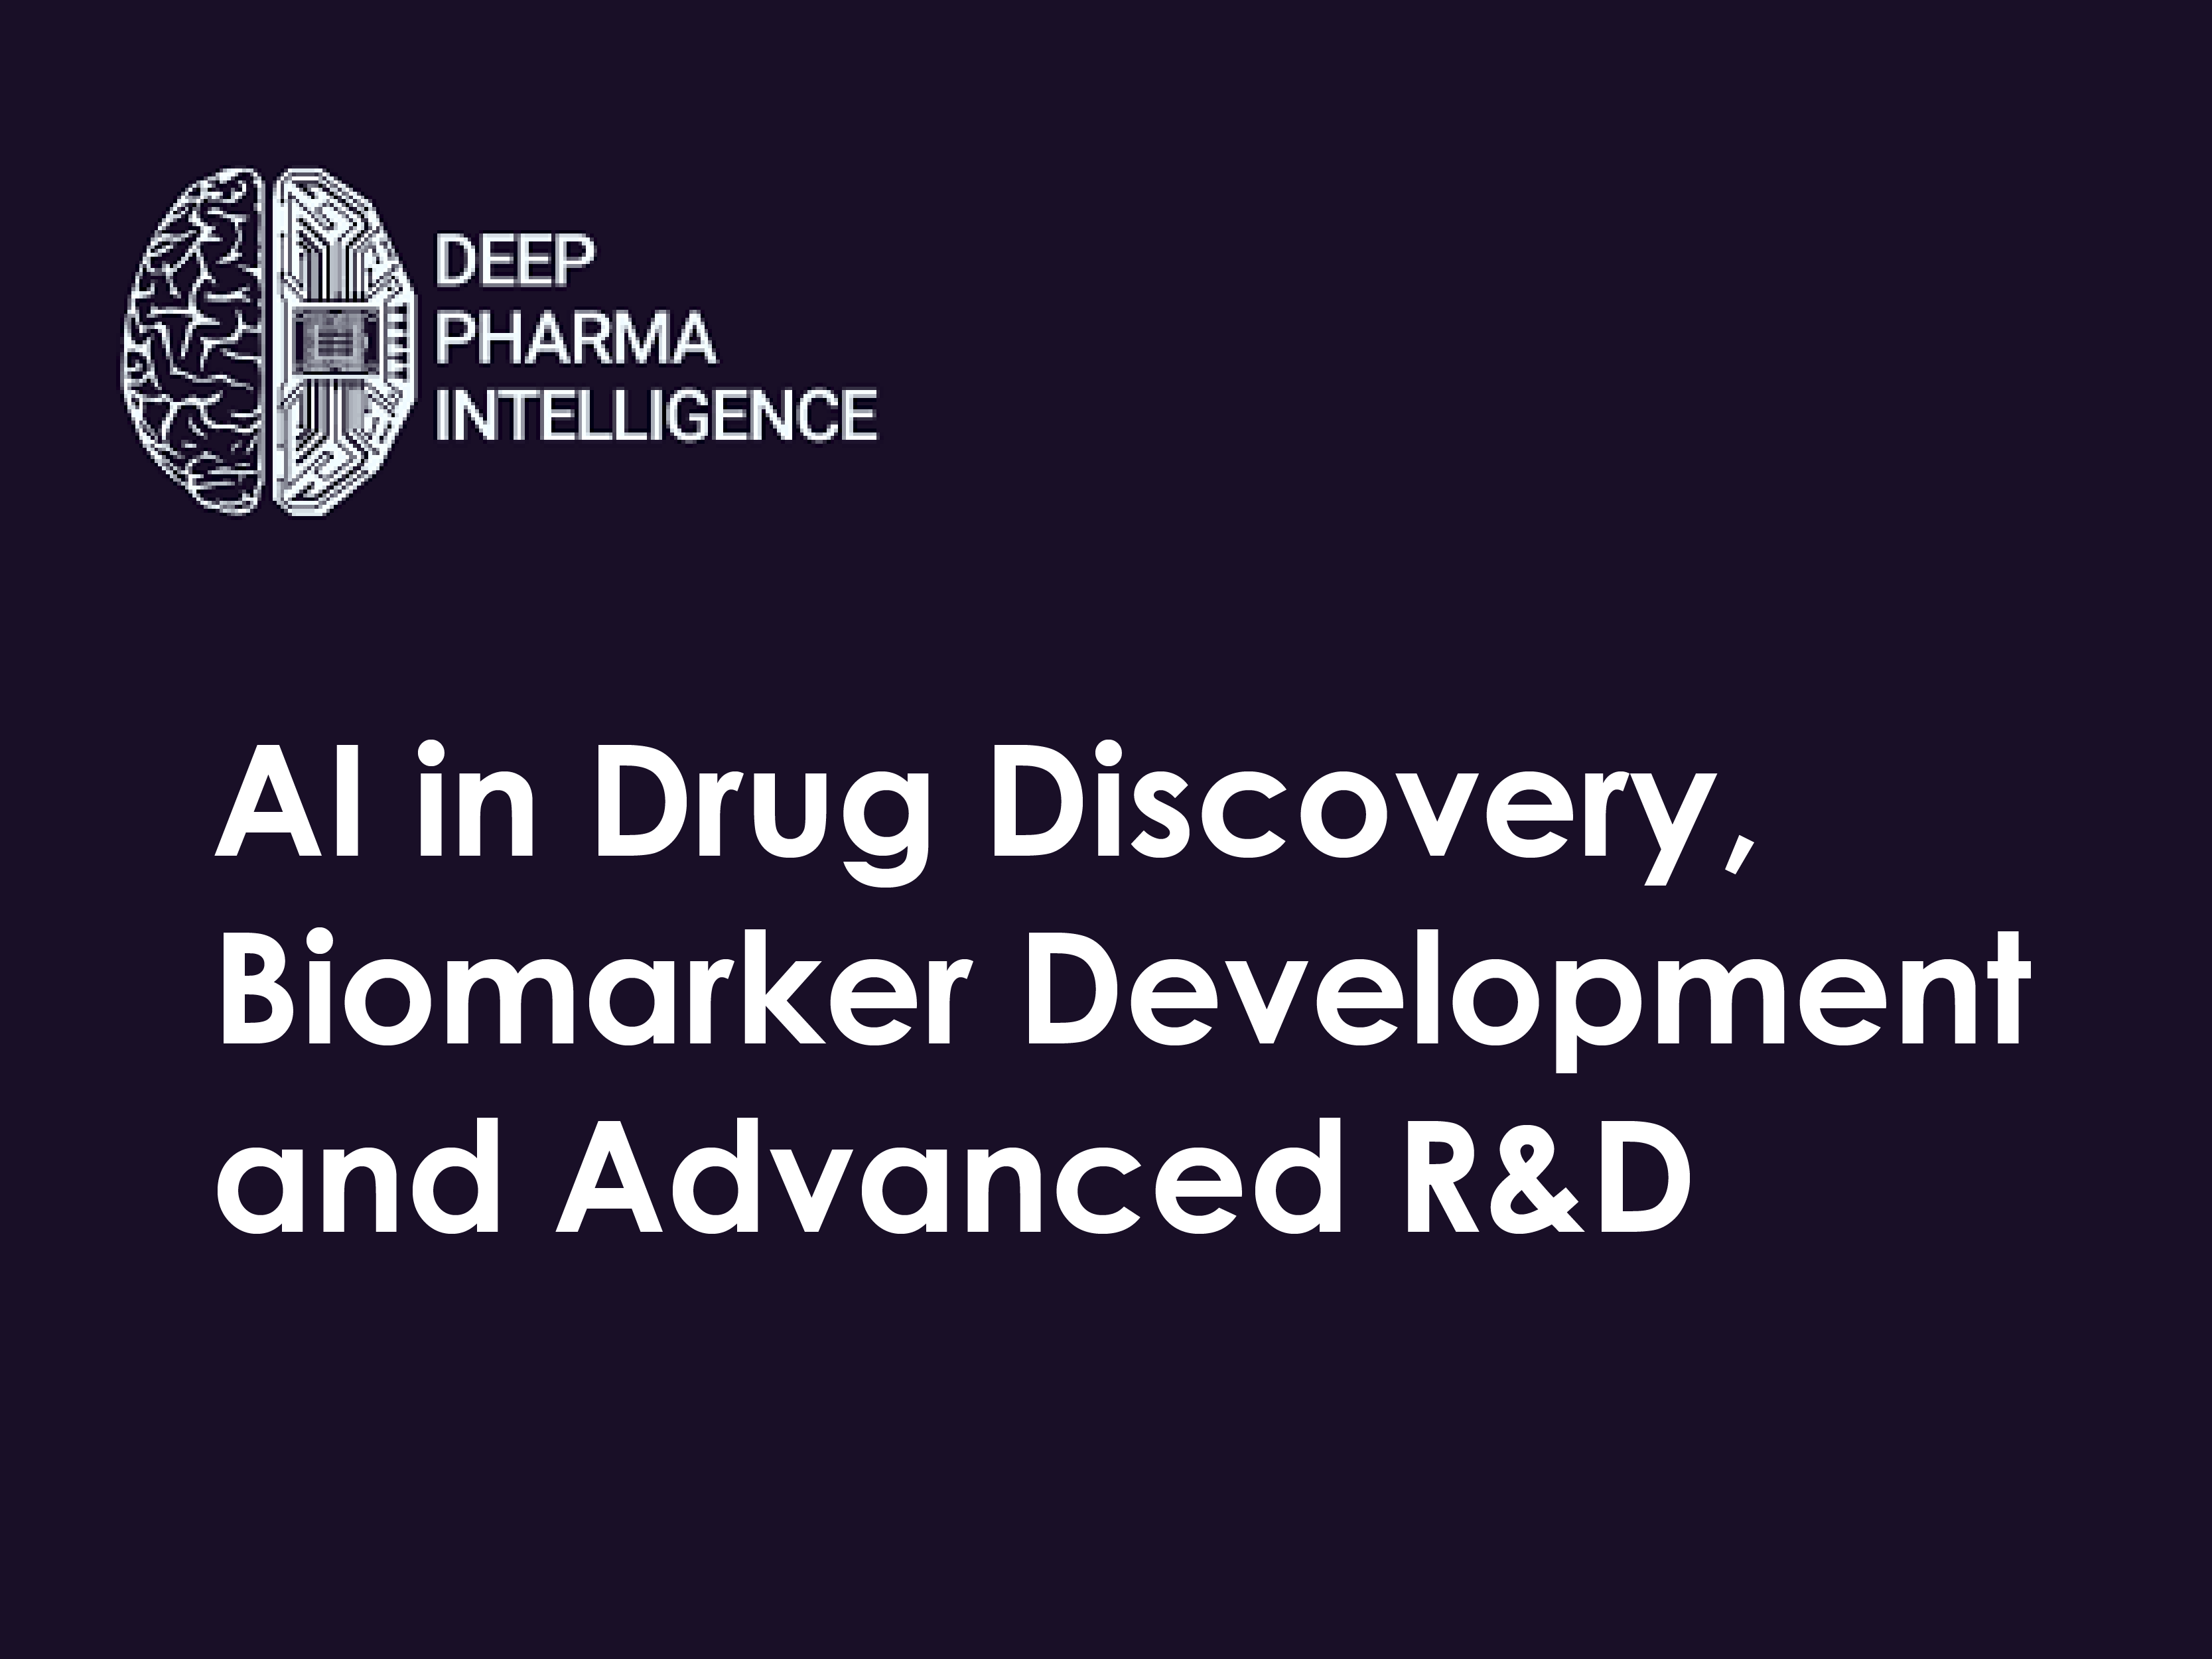 <h5>AI in Drug Discovery, Biomarker Development and Advanced R&D </b><br><h6><b>DEEP PHARMA INTELLIGENCE</h6></b>